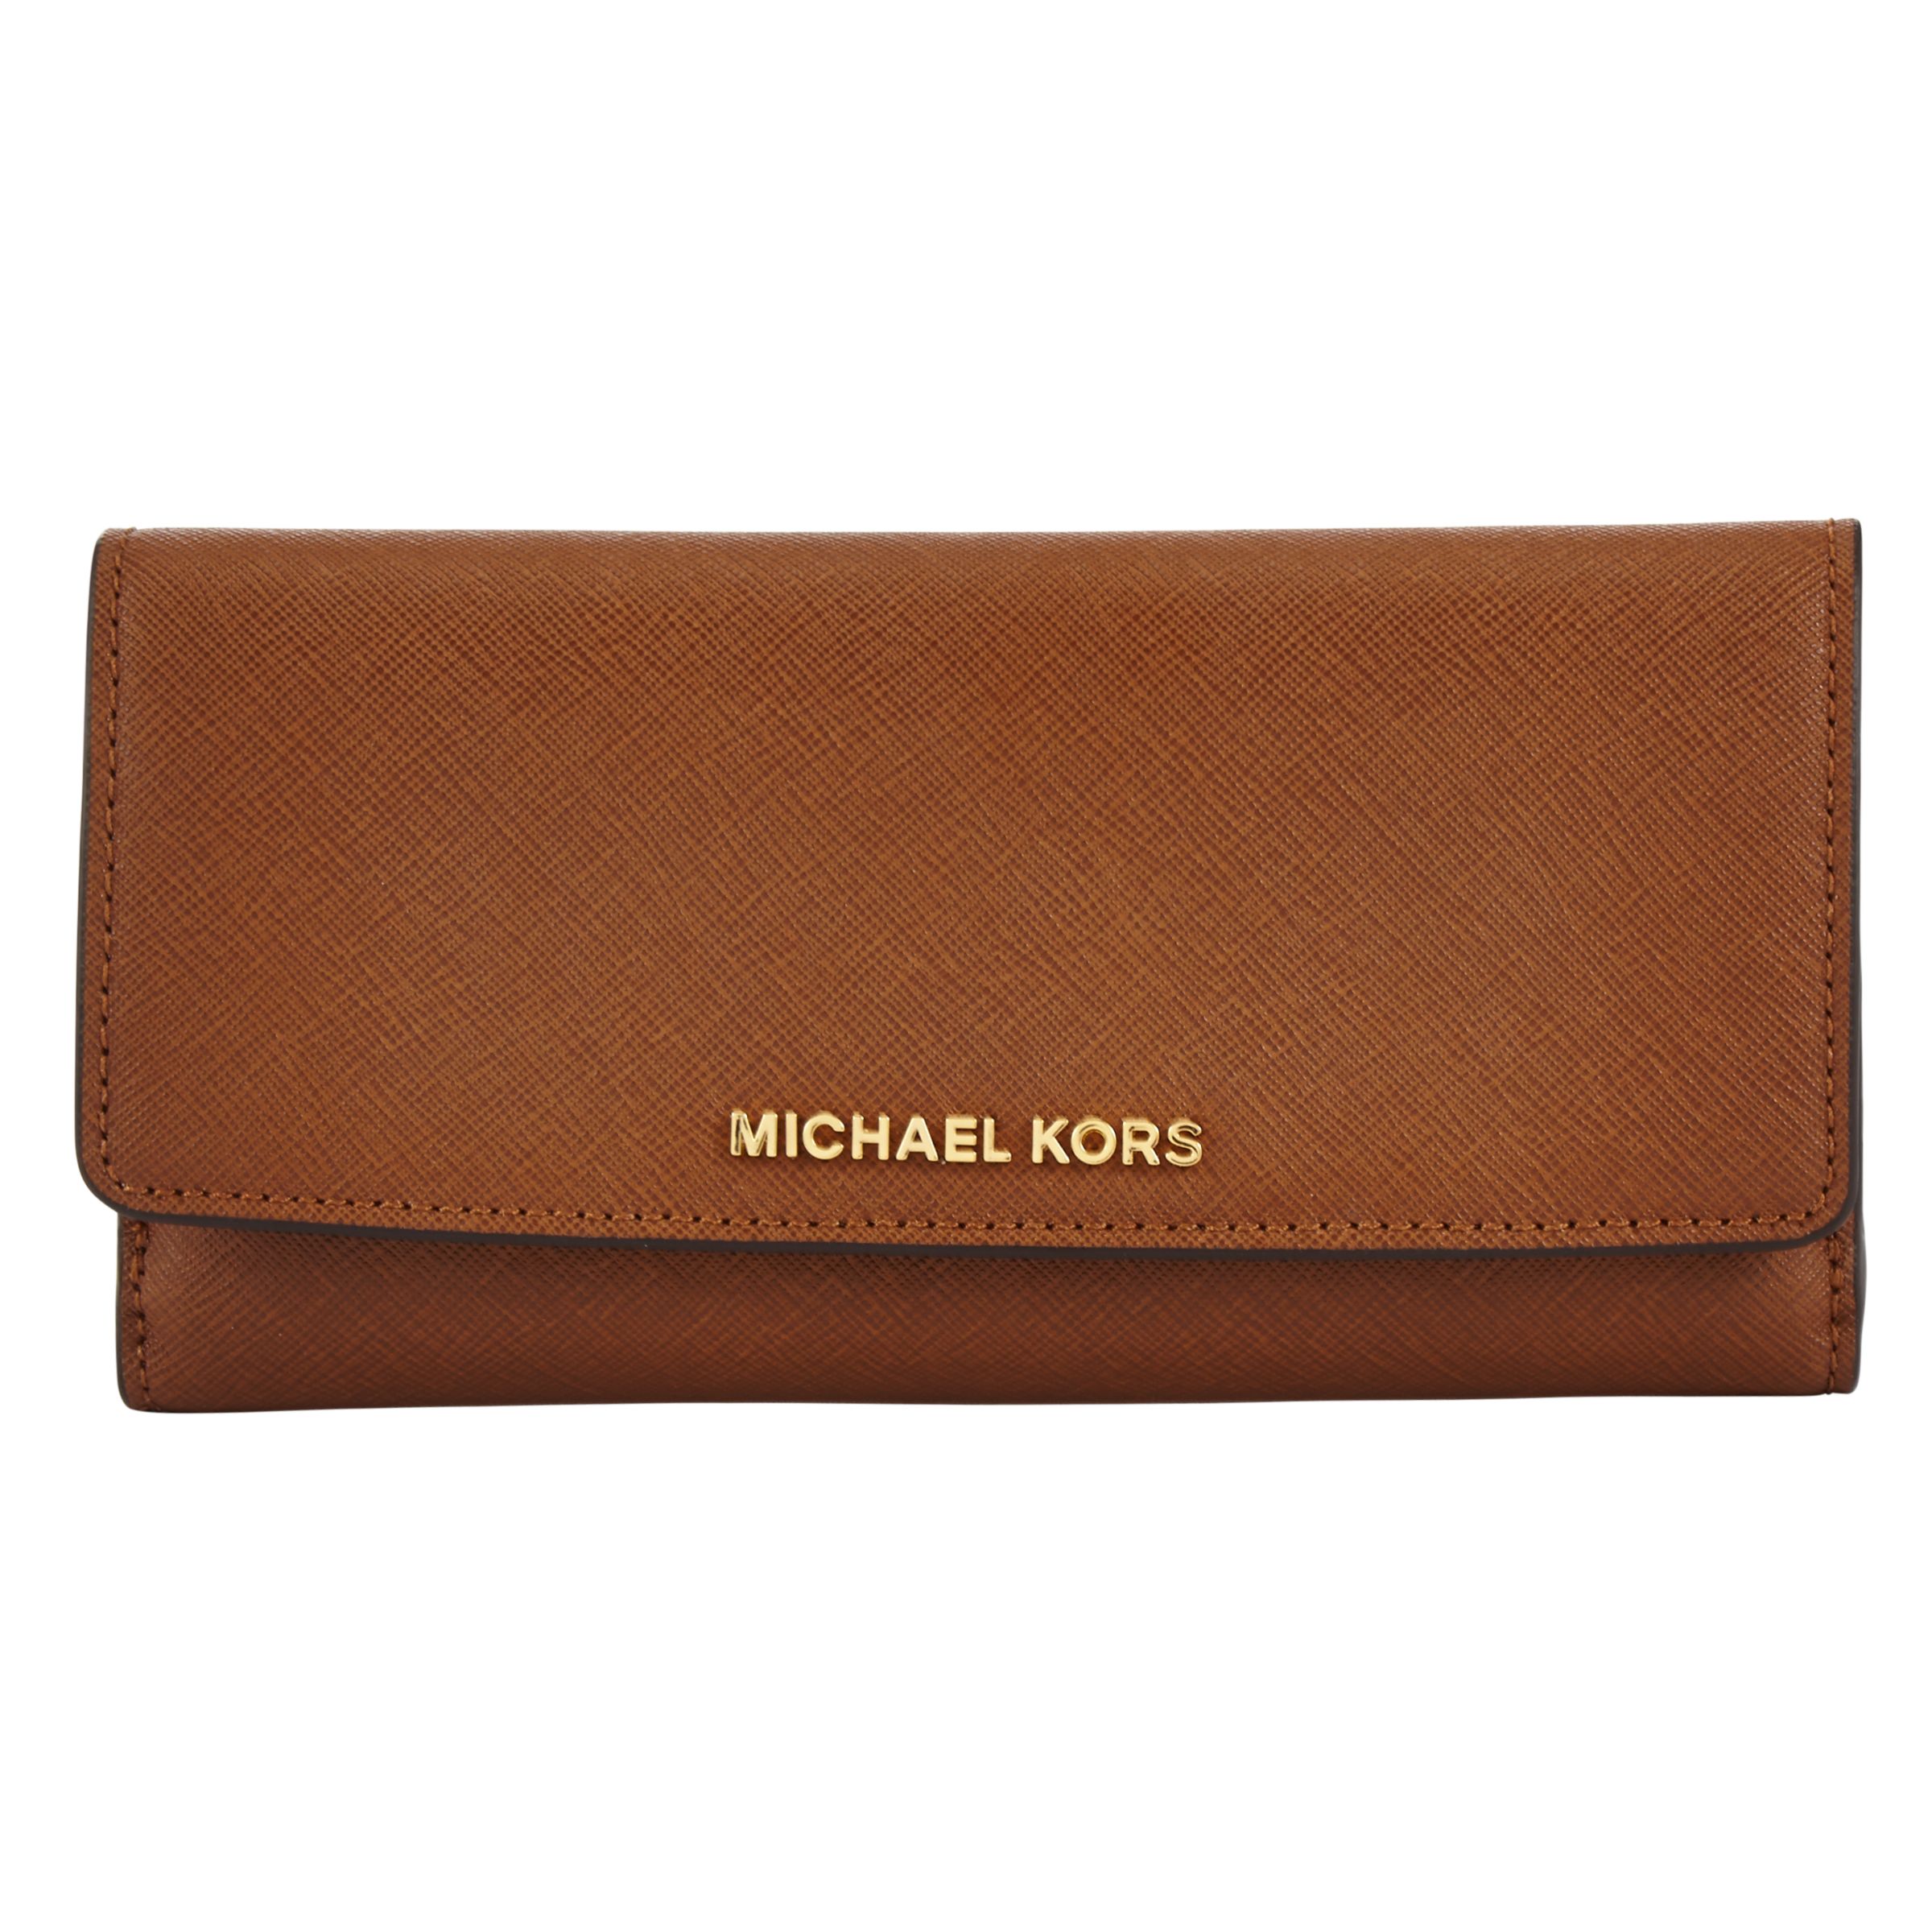 michael kors trifold wallet